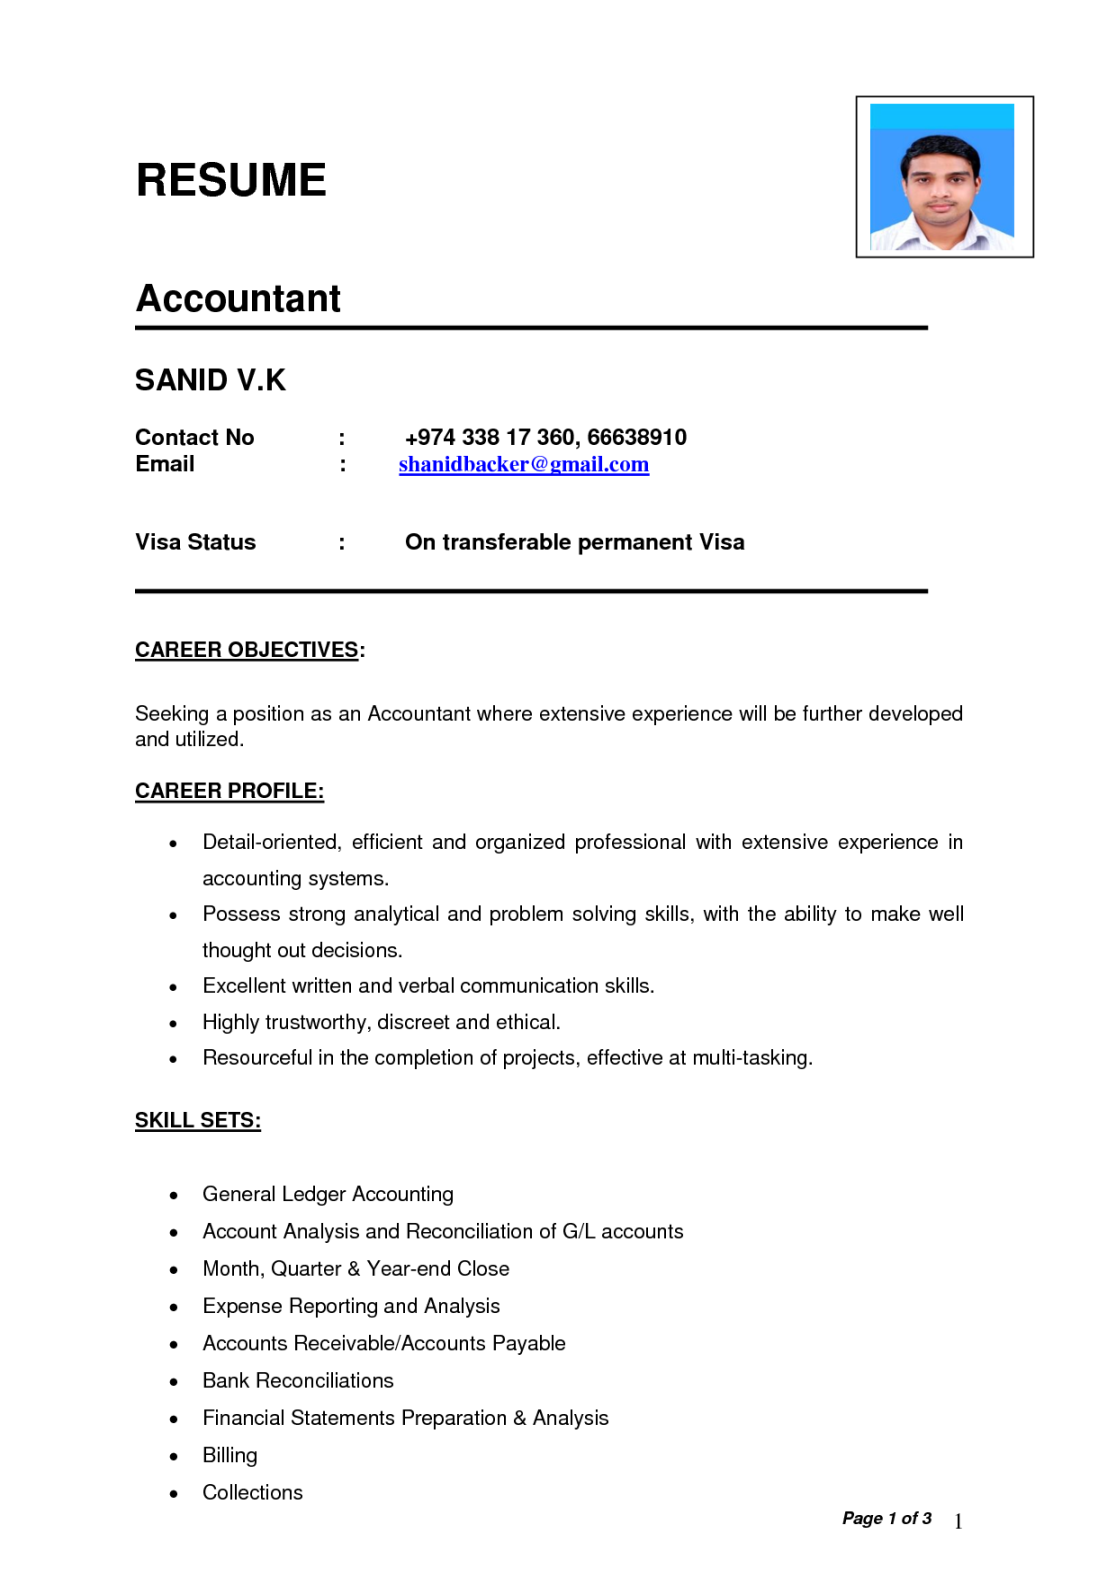 Resume Format India , #format #india #resume #ResumeFormat  Job